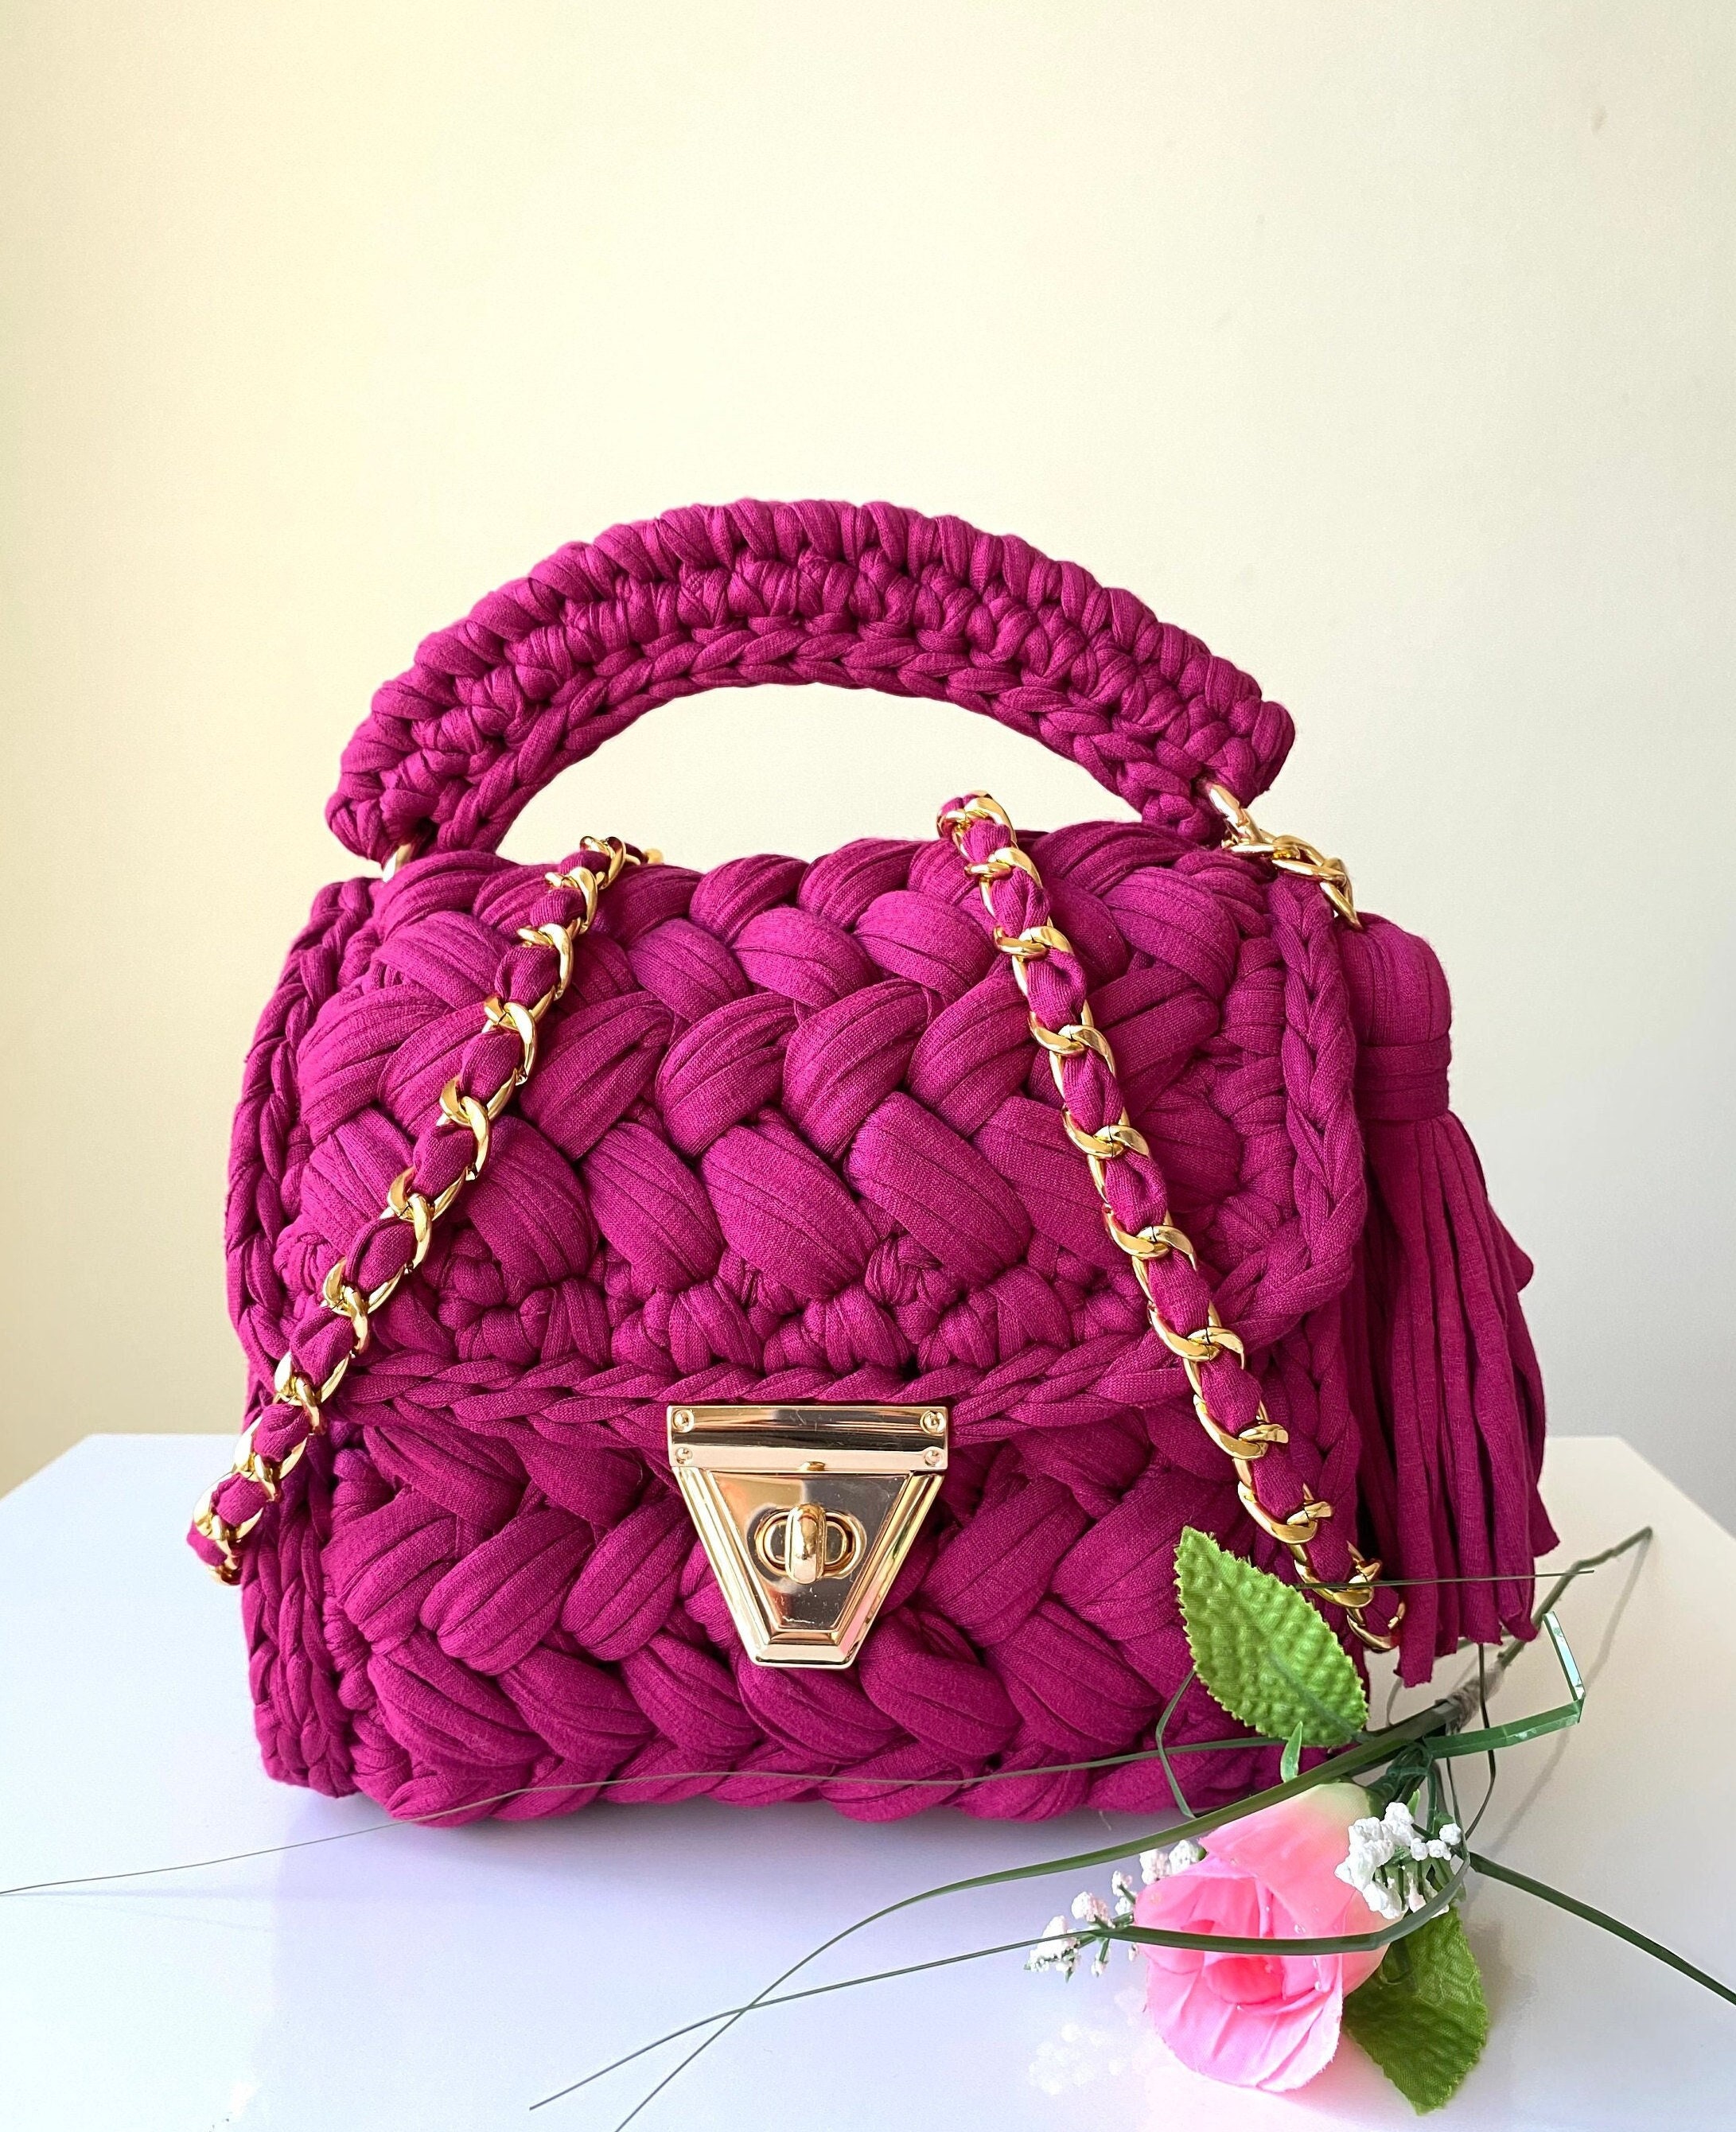 Hand Woven Bag/Handmade Bag/Crochet Bag/Knitted Bag/Hand Knitted Bag/Luxury Bag/Womens Bag/Designer Bag/Black Bag/Shoulder Bag